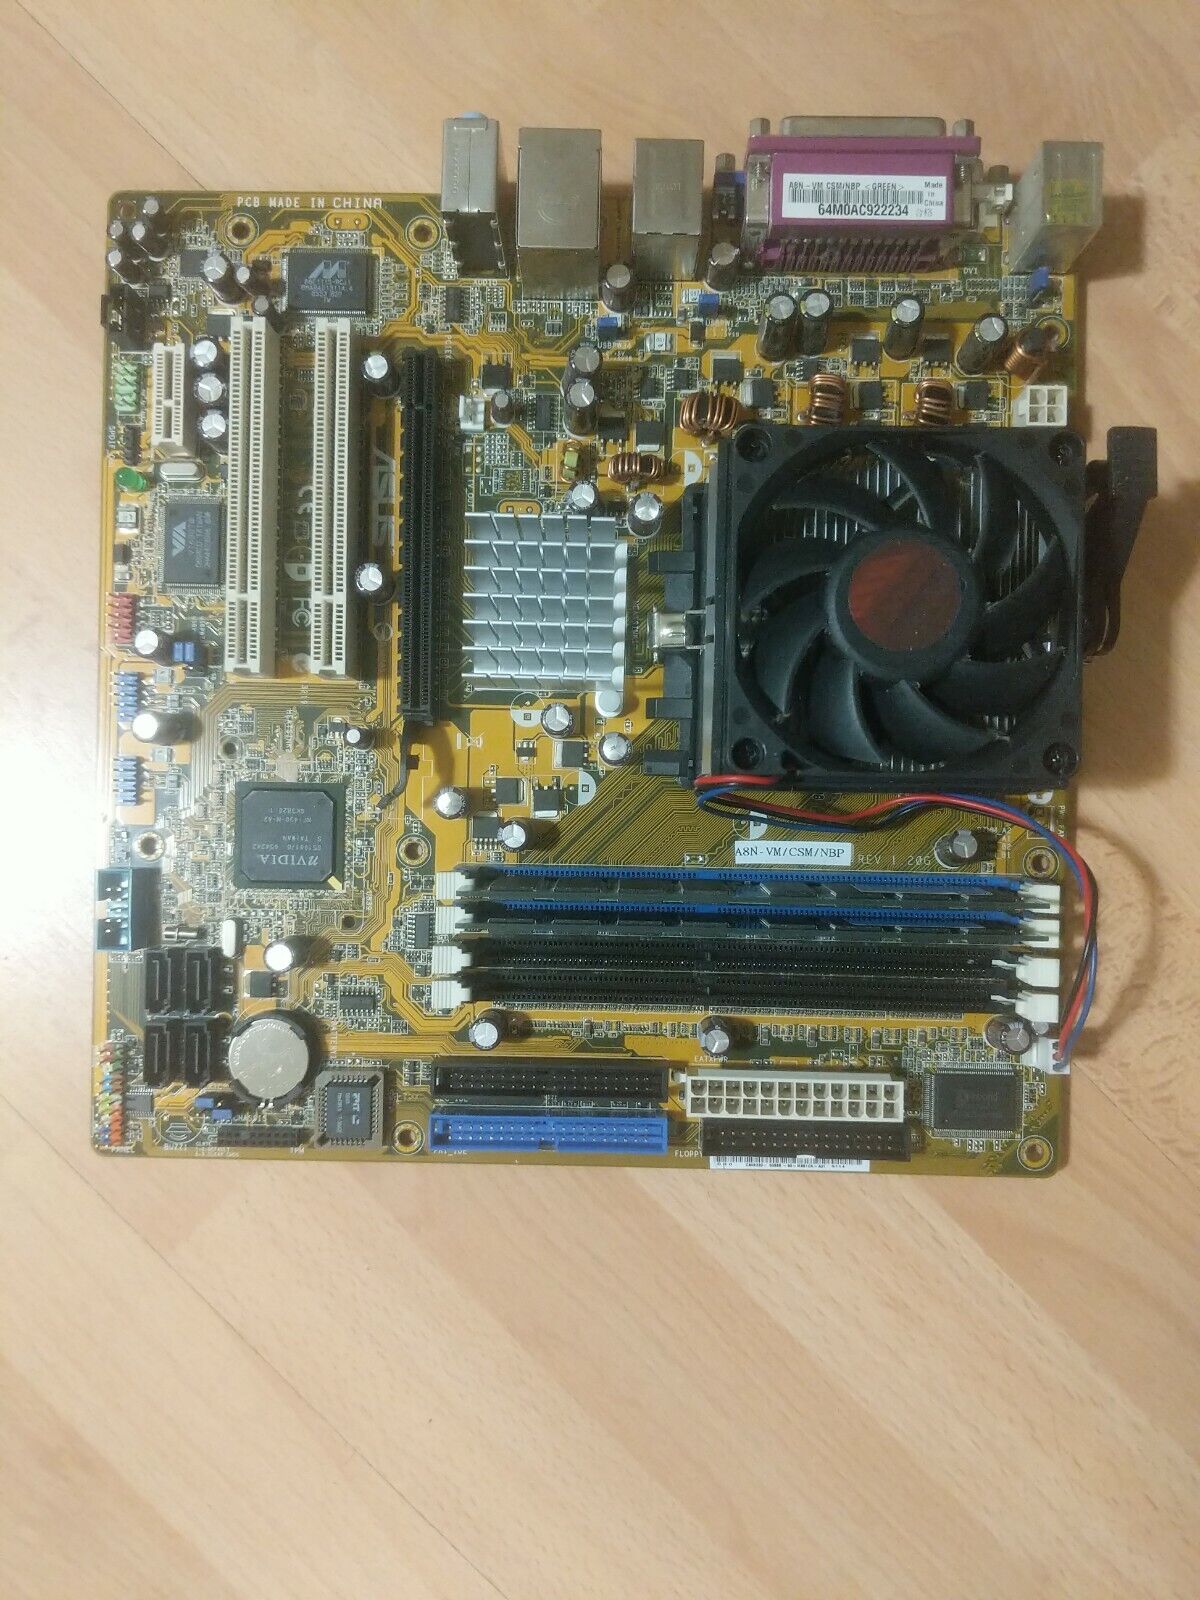 ASUS A8N-VM Micro ATX Motherboard + Athlon64 3500+ 2.2GHZ CPU and 1GB - NVIDIA